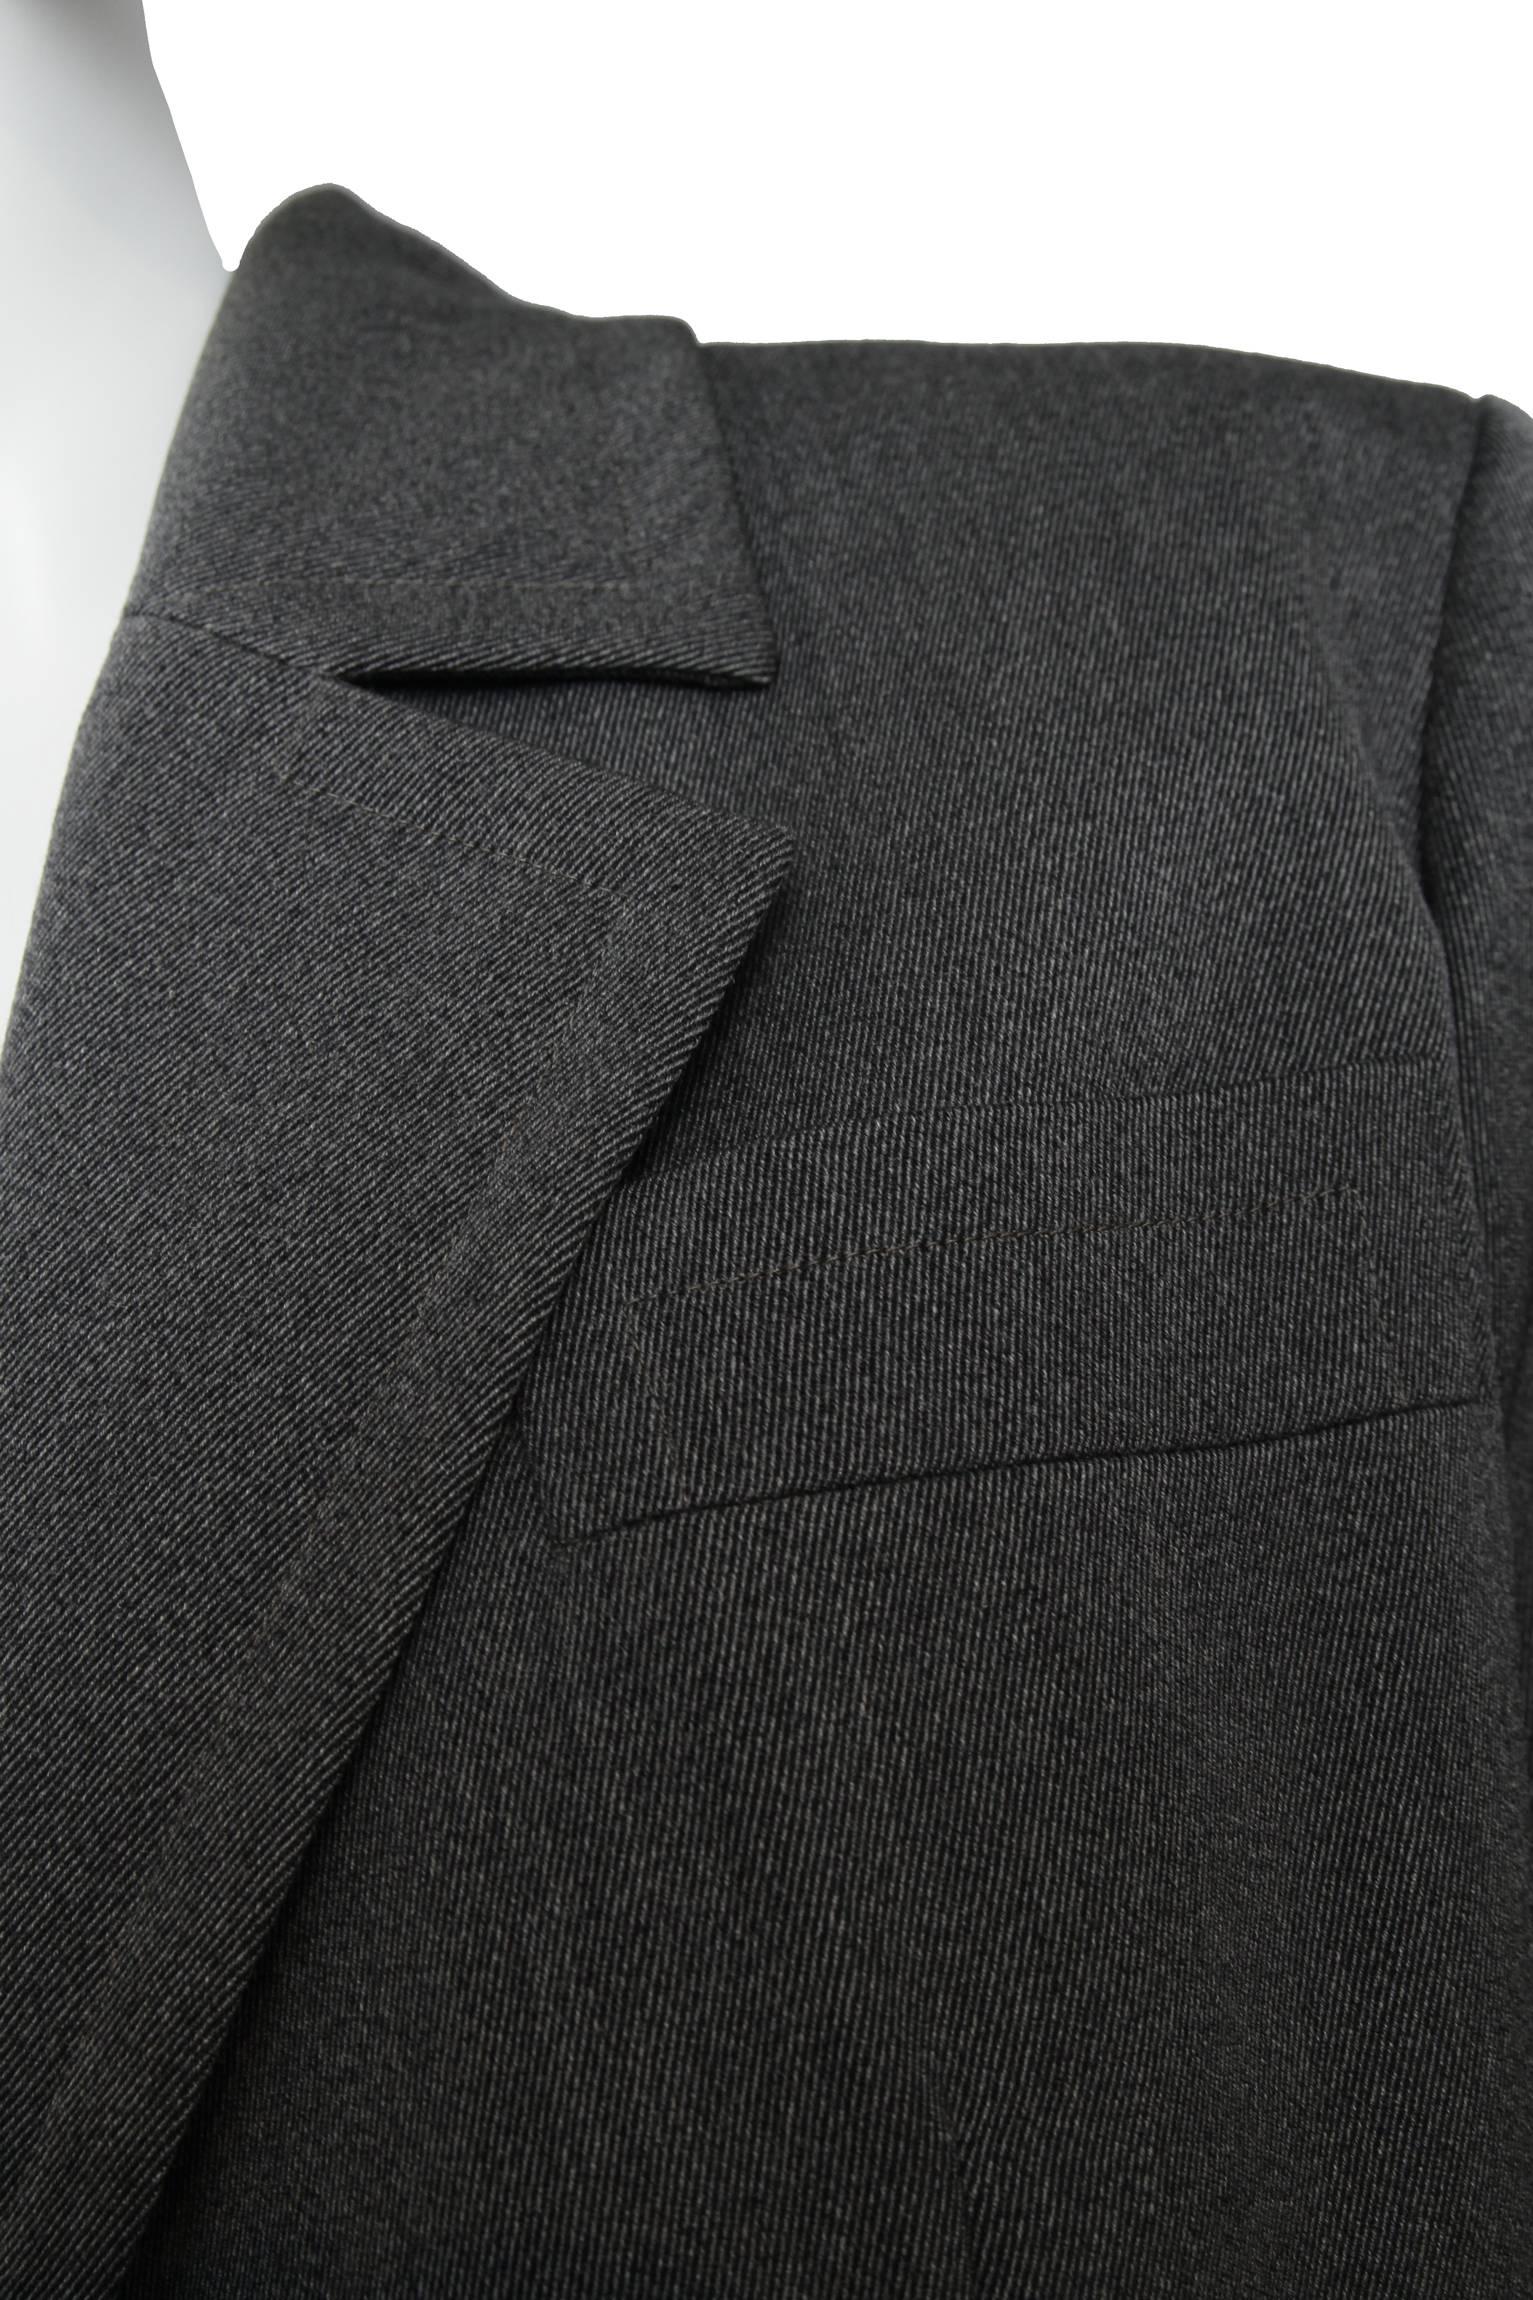 Women's A 1960s Yves Saint Laurent Haute Couture Wool Skirt Suit For Sale